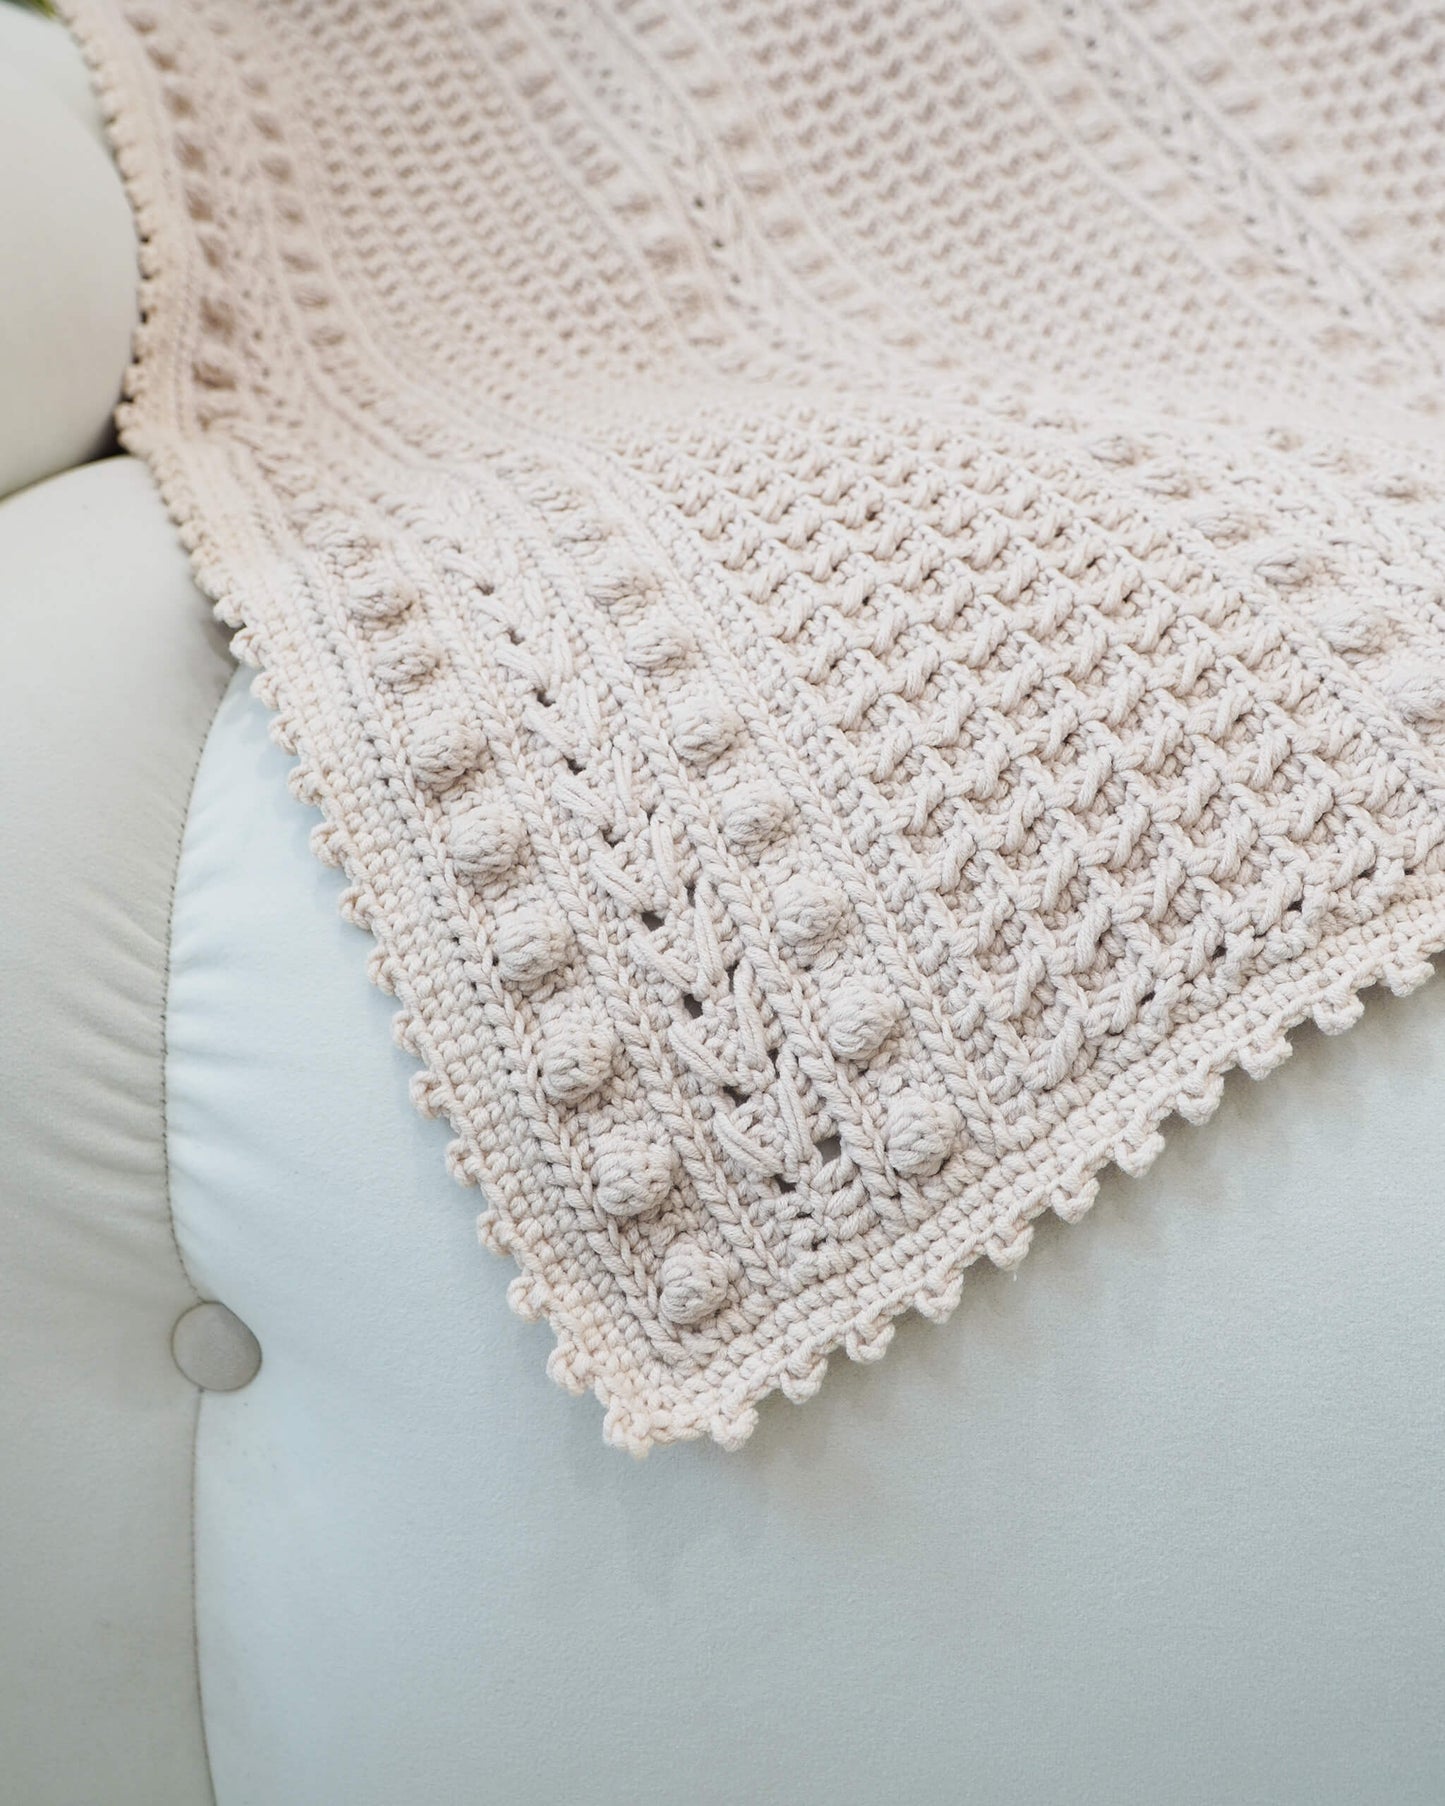 Easy crochet modern blanket pattern + Video tutorial